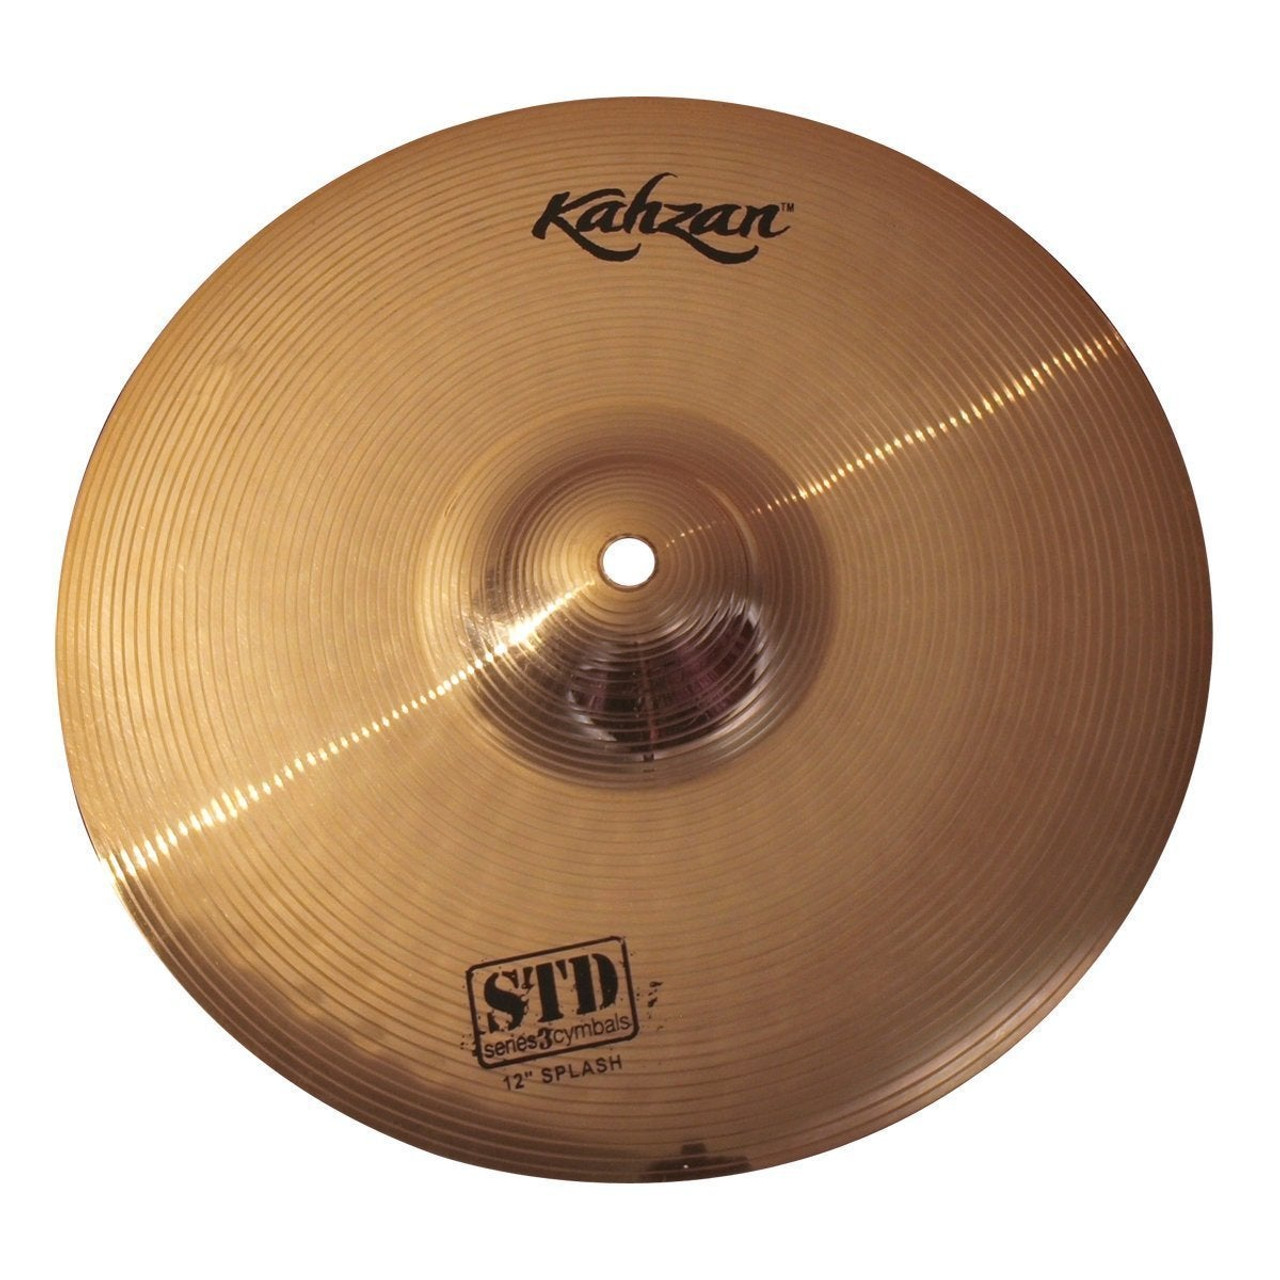 Kahzan 'STD-3 Series' Splash Cymbal (12")